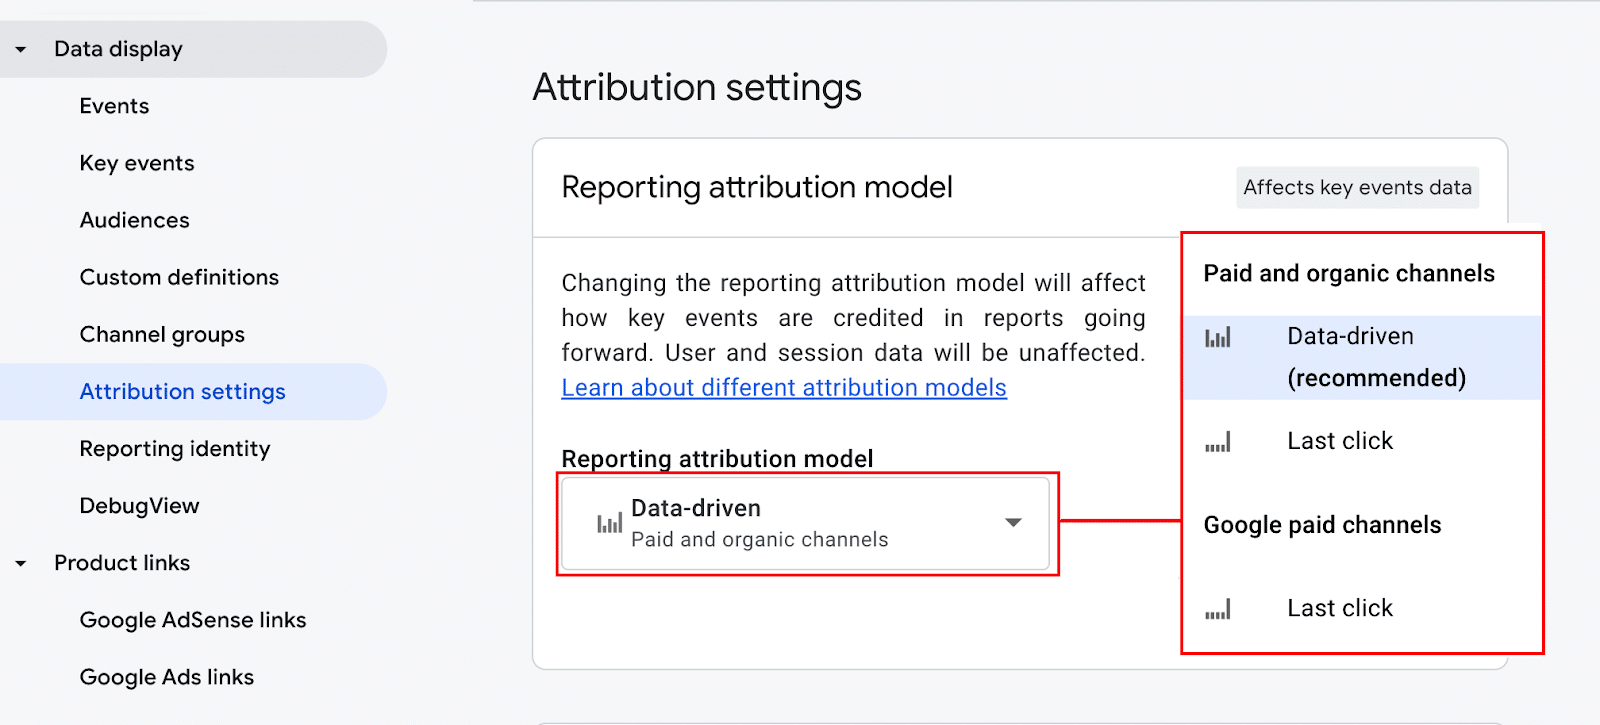 Attribution settings